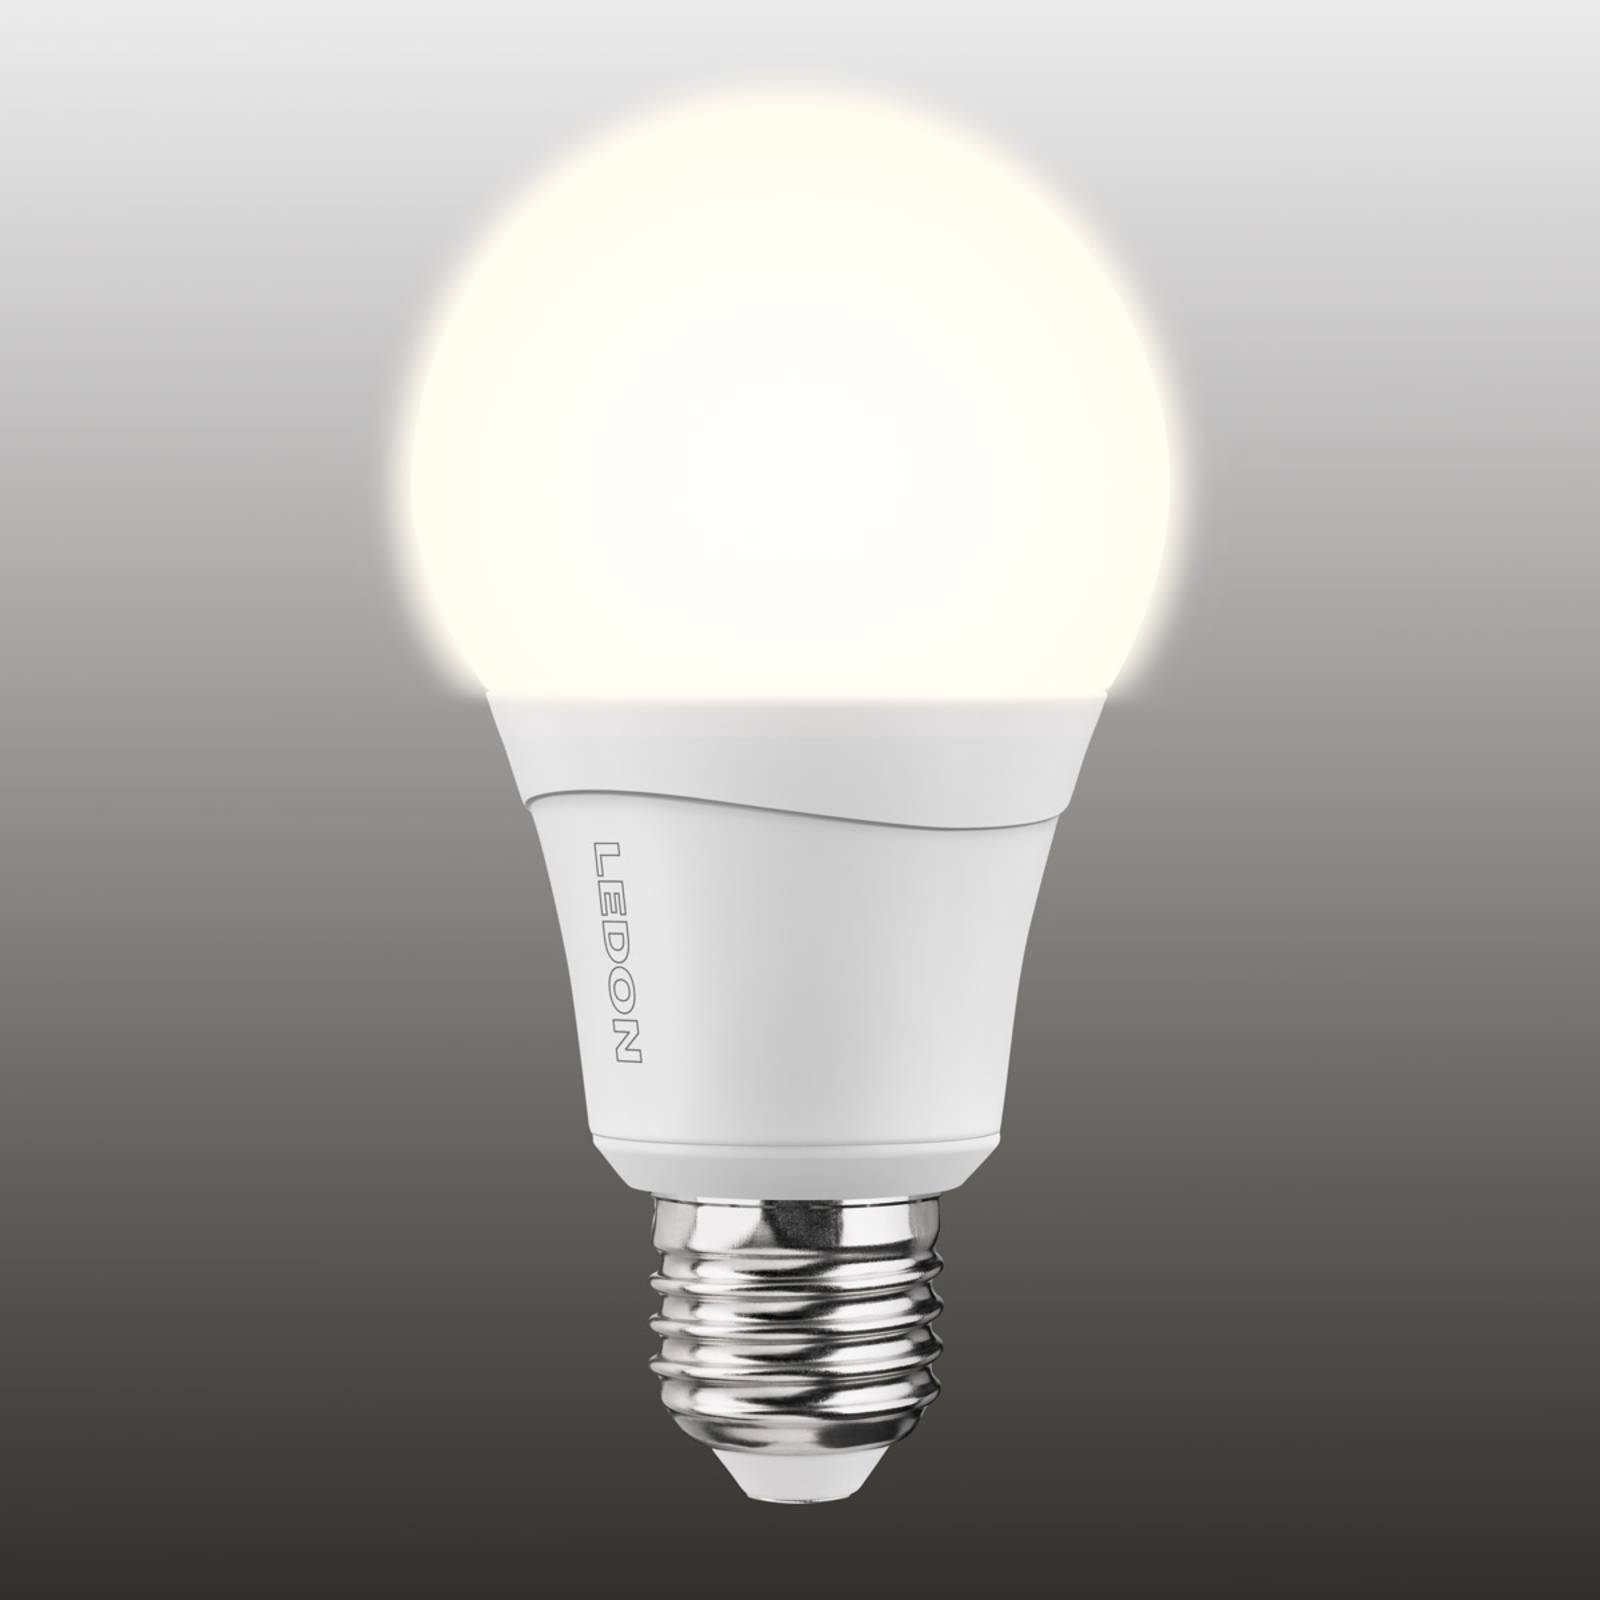 Ledon E27 10W LED-Lampe dual color (827/840), dimmbar